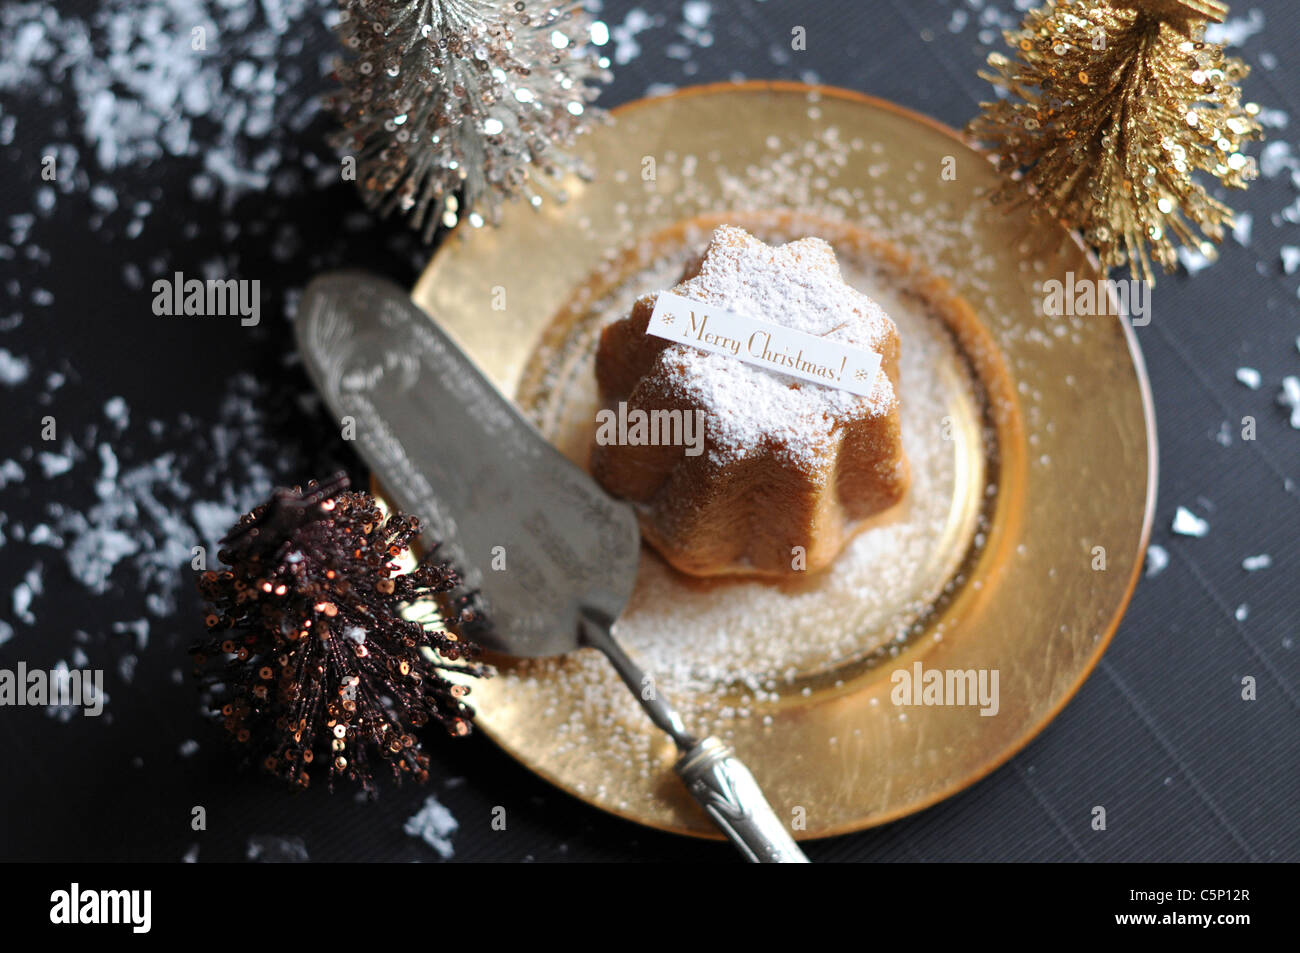 https://c8.alamy.com/comp/C5P12R/italian-christmas-cake-pandoro-C5P12R.jpg